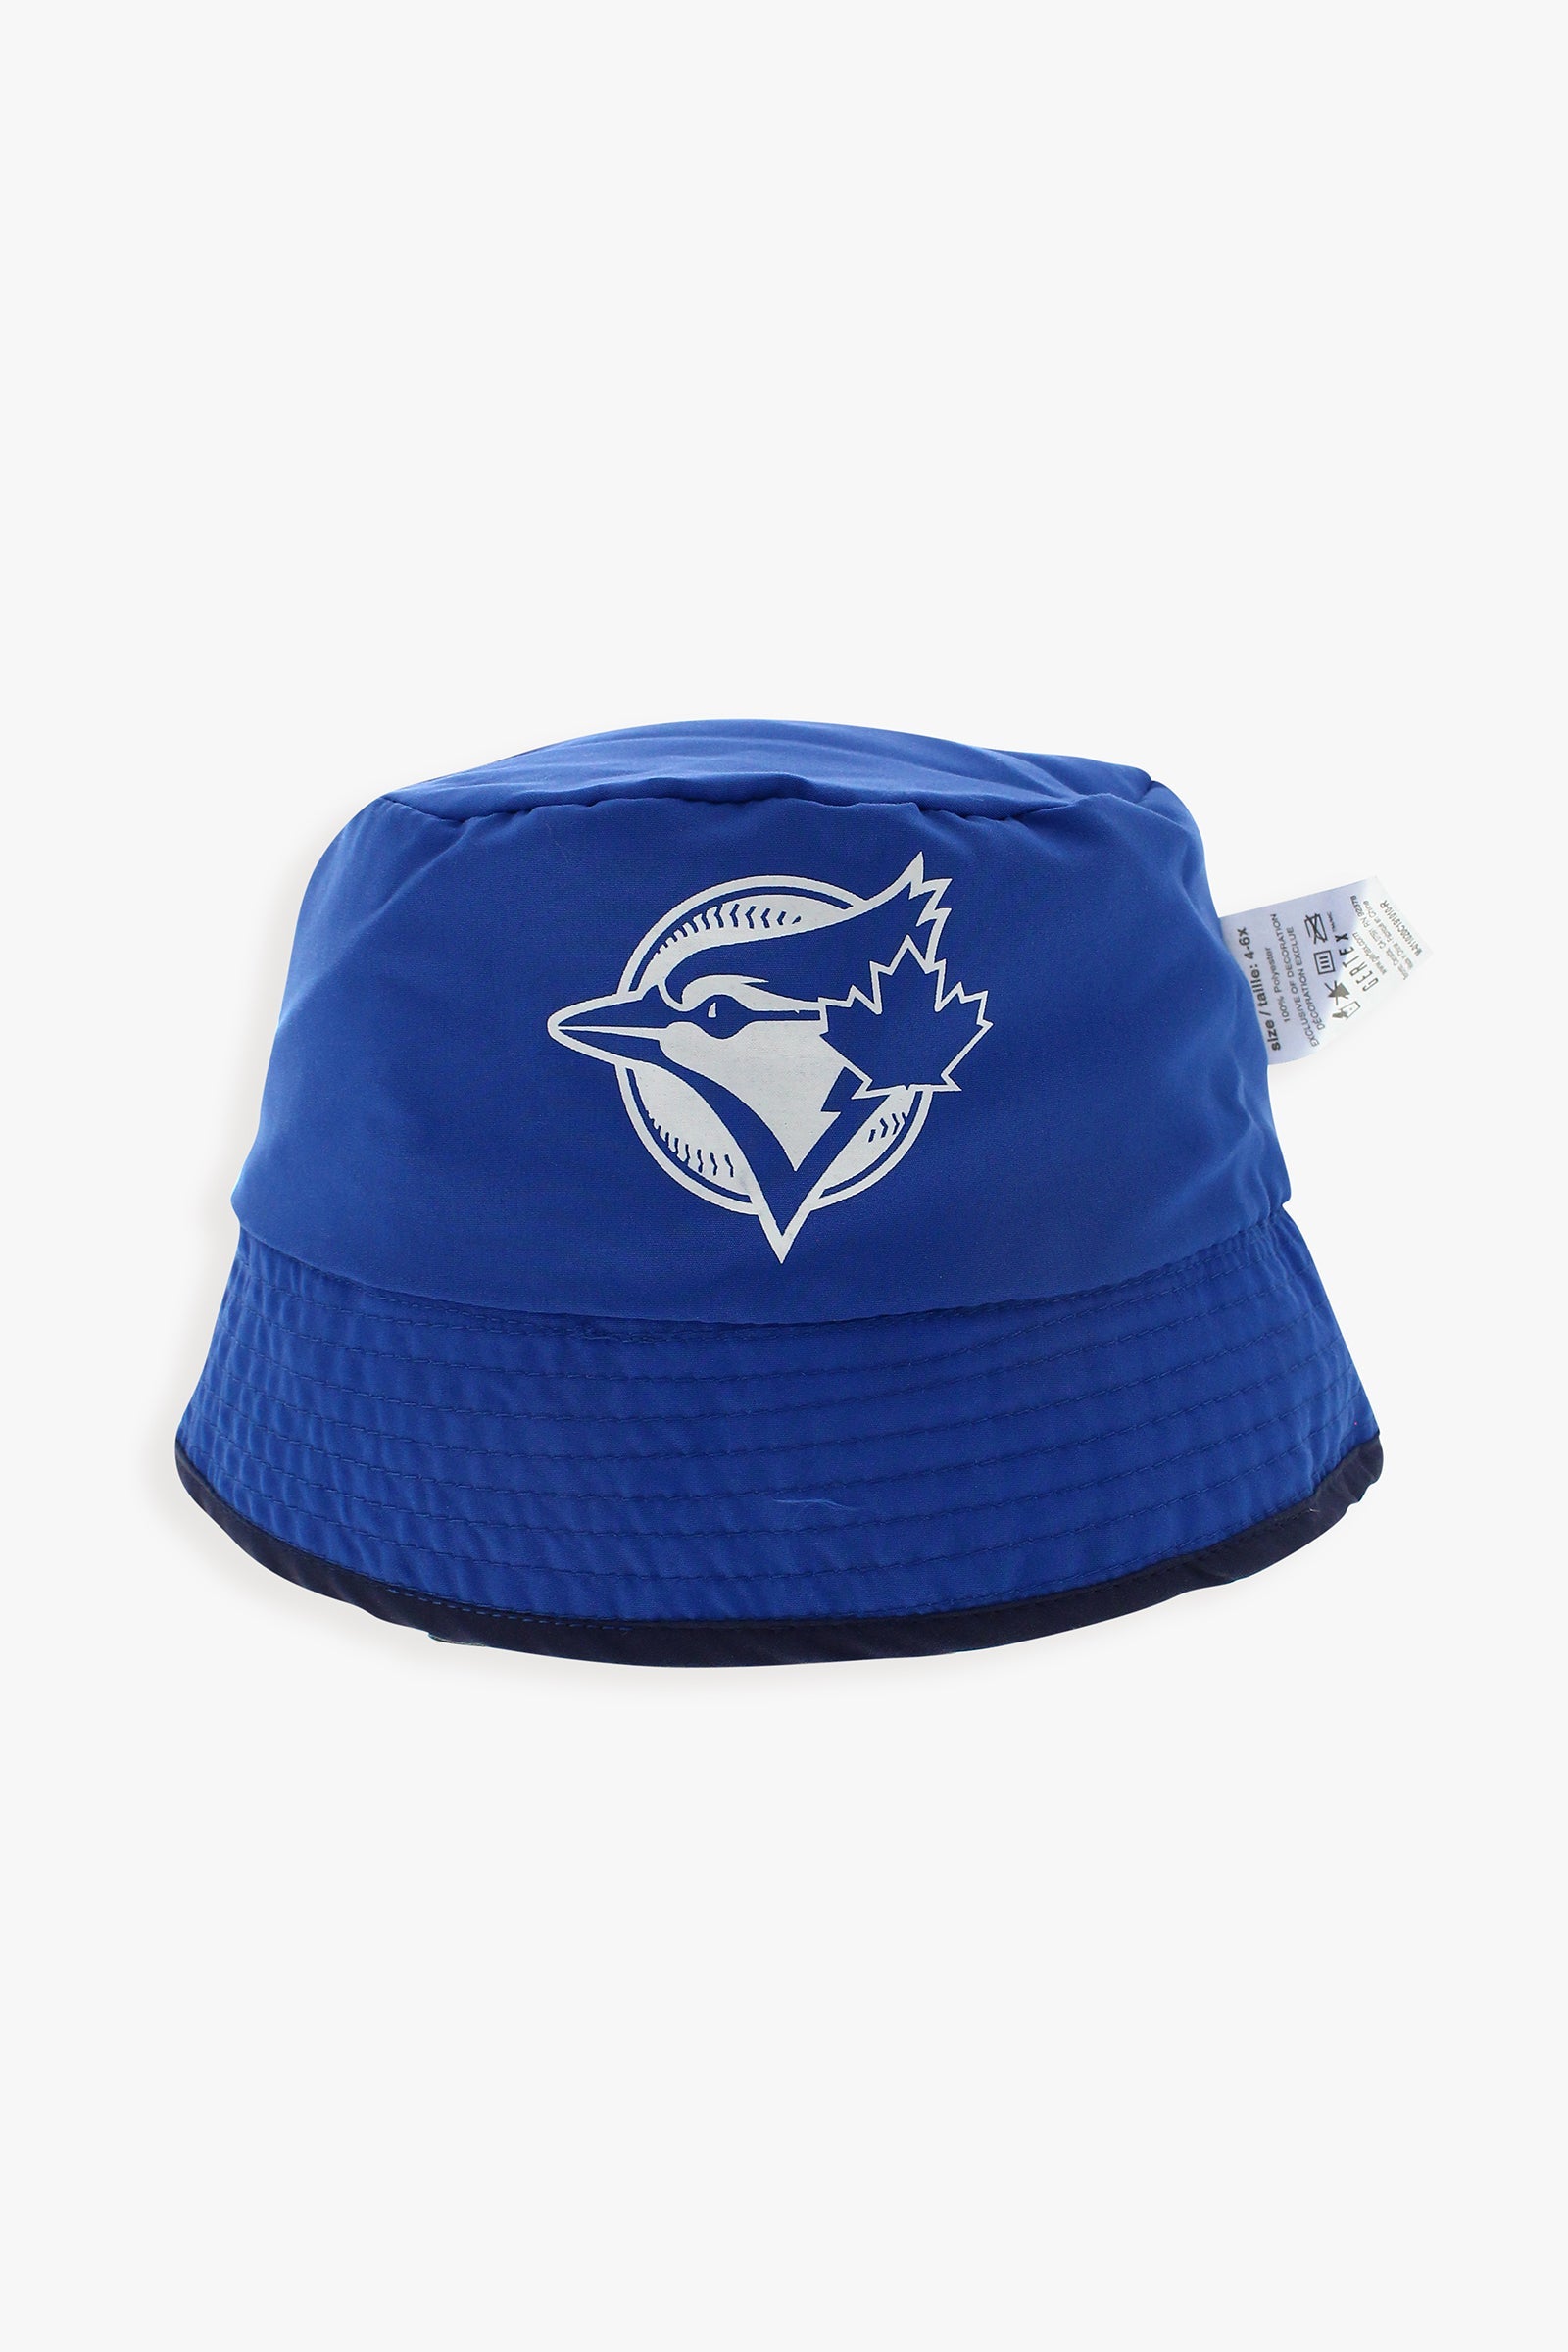 Gertex MLB Toronto Blue Jays Baby Reversible Bucket Hat